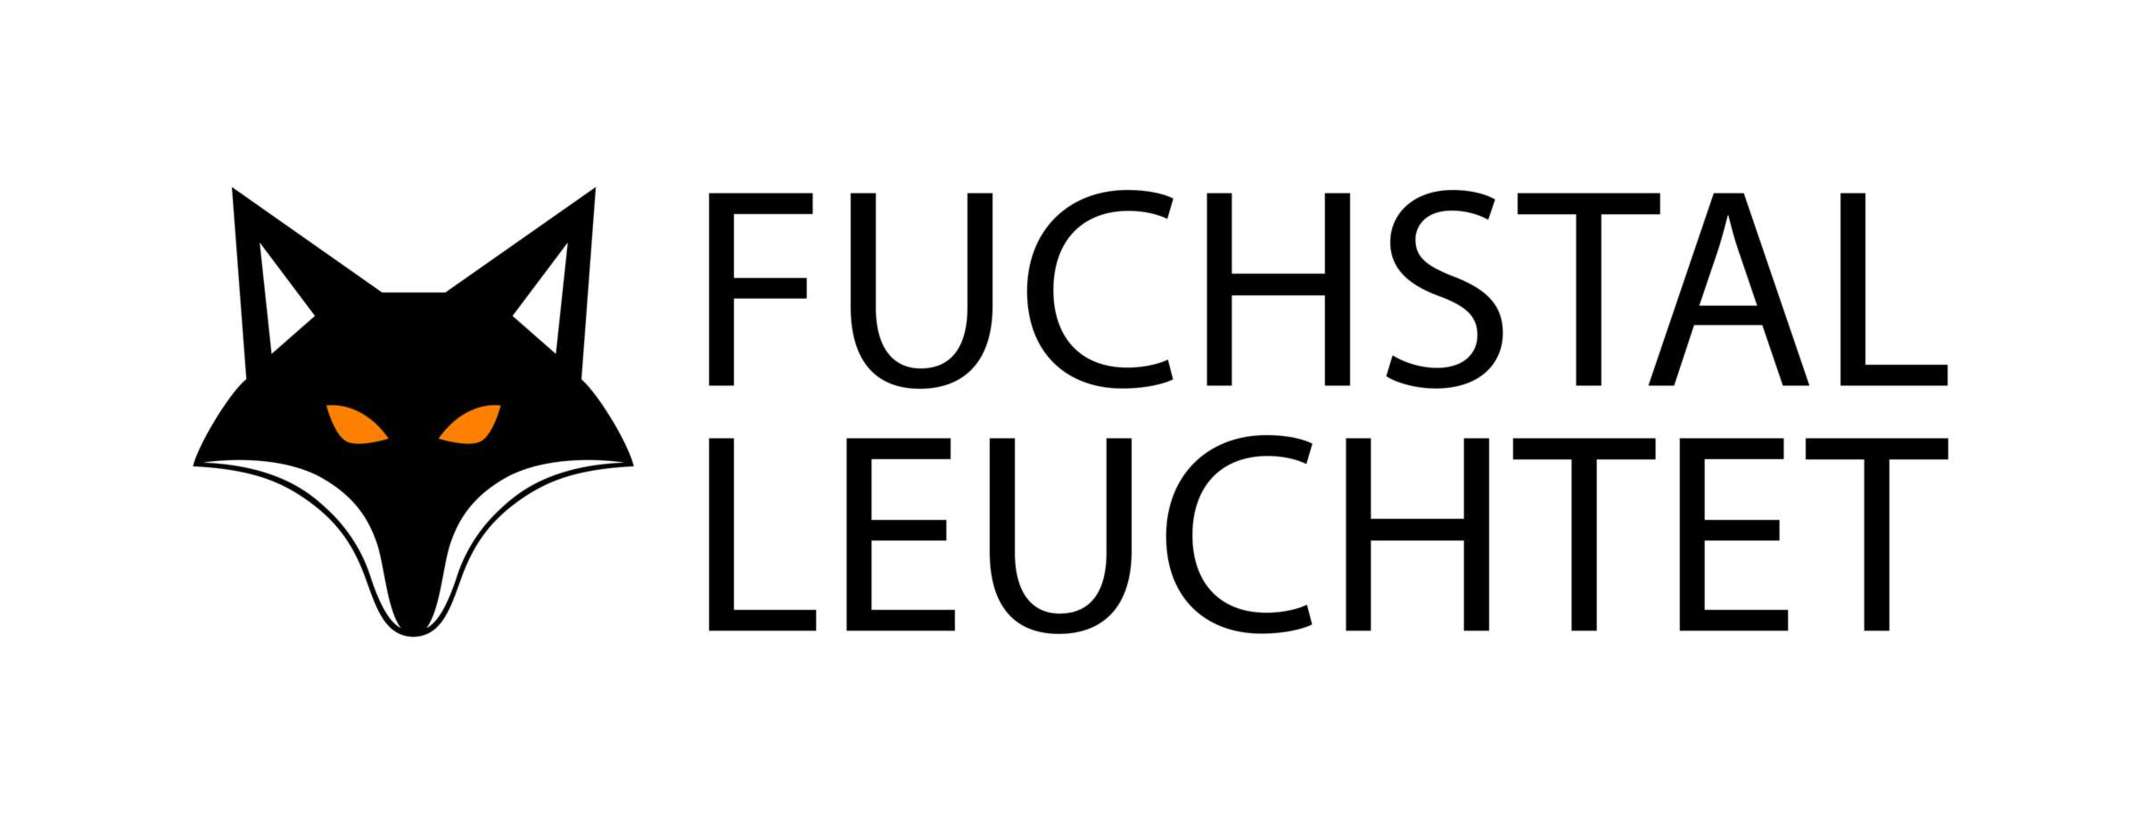 Logo Fuchstal leuchtet